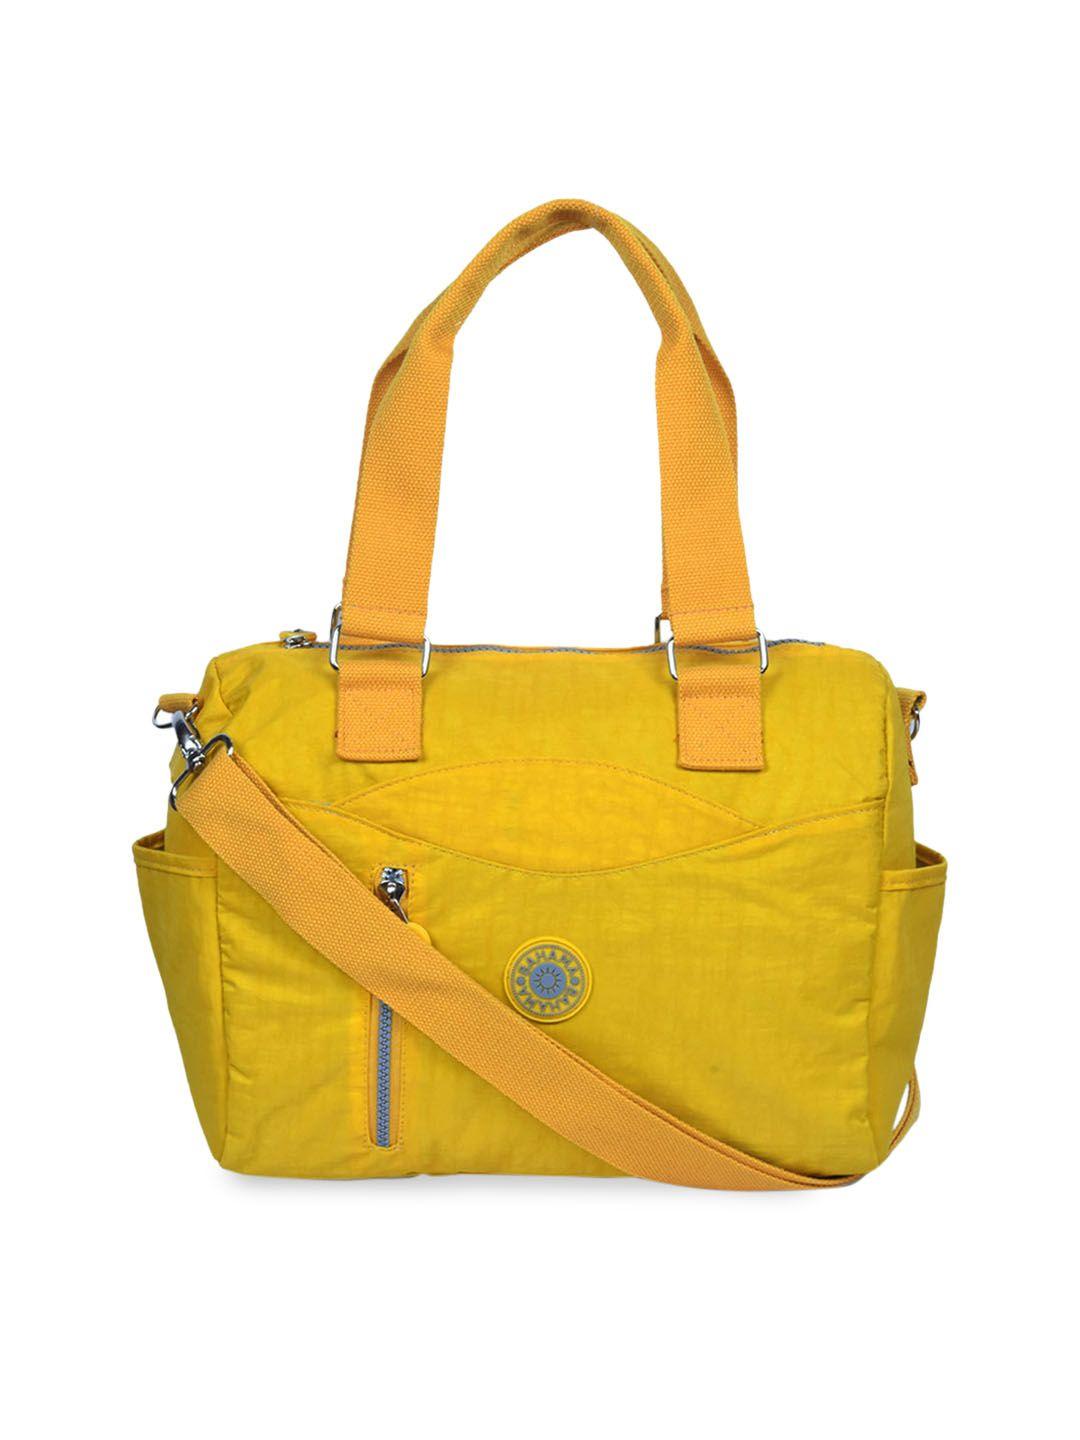 bahama yellow structured handheld bag